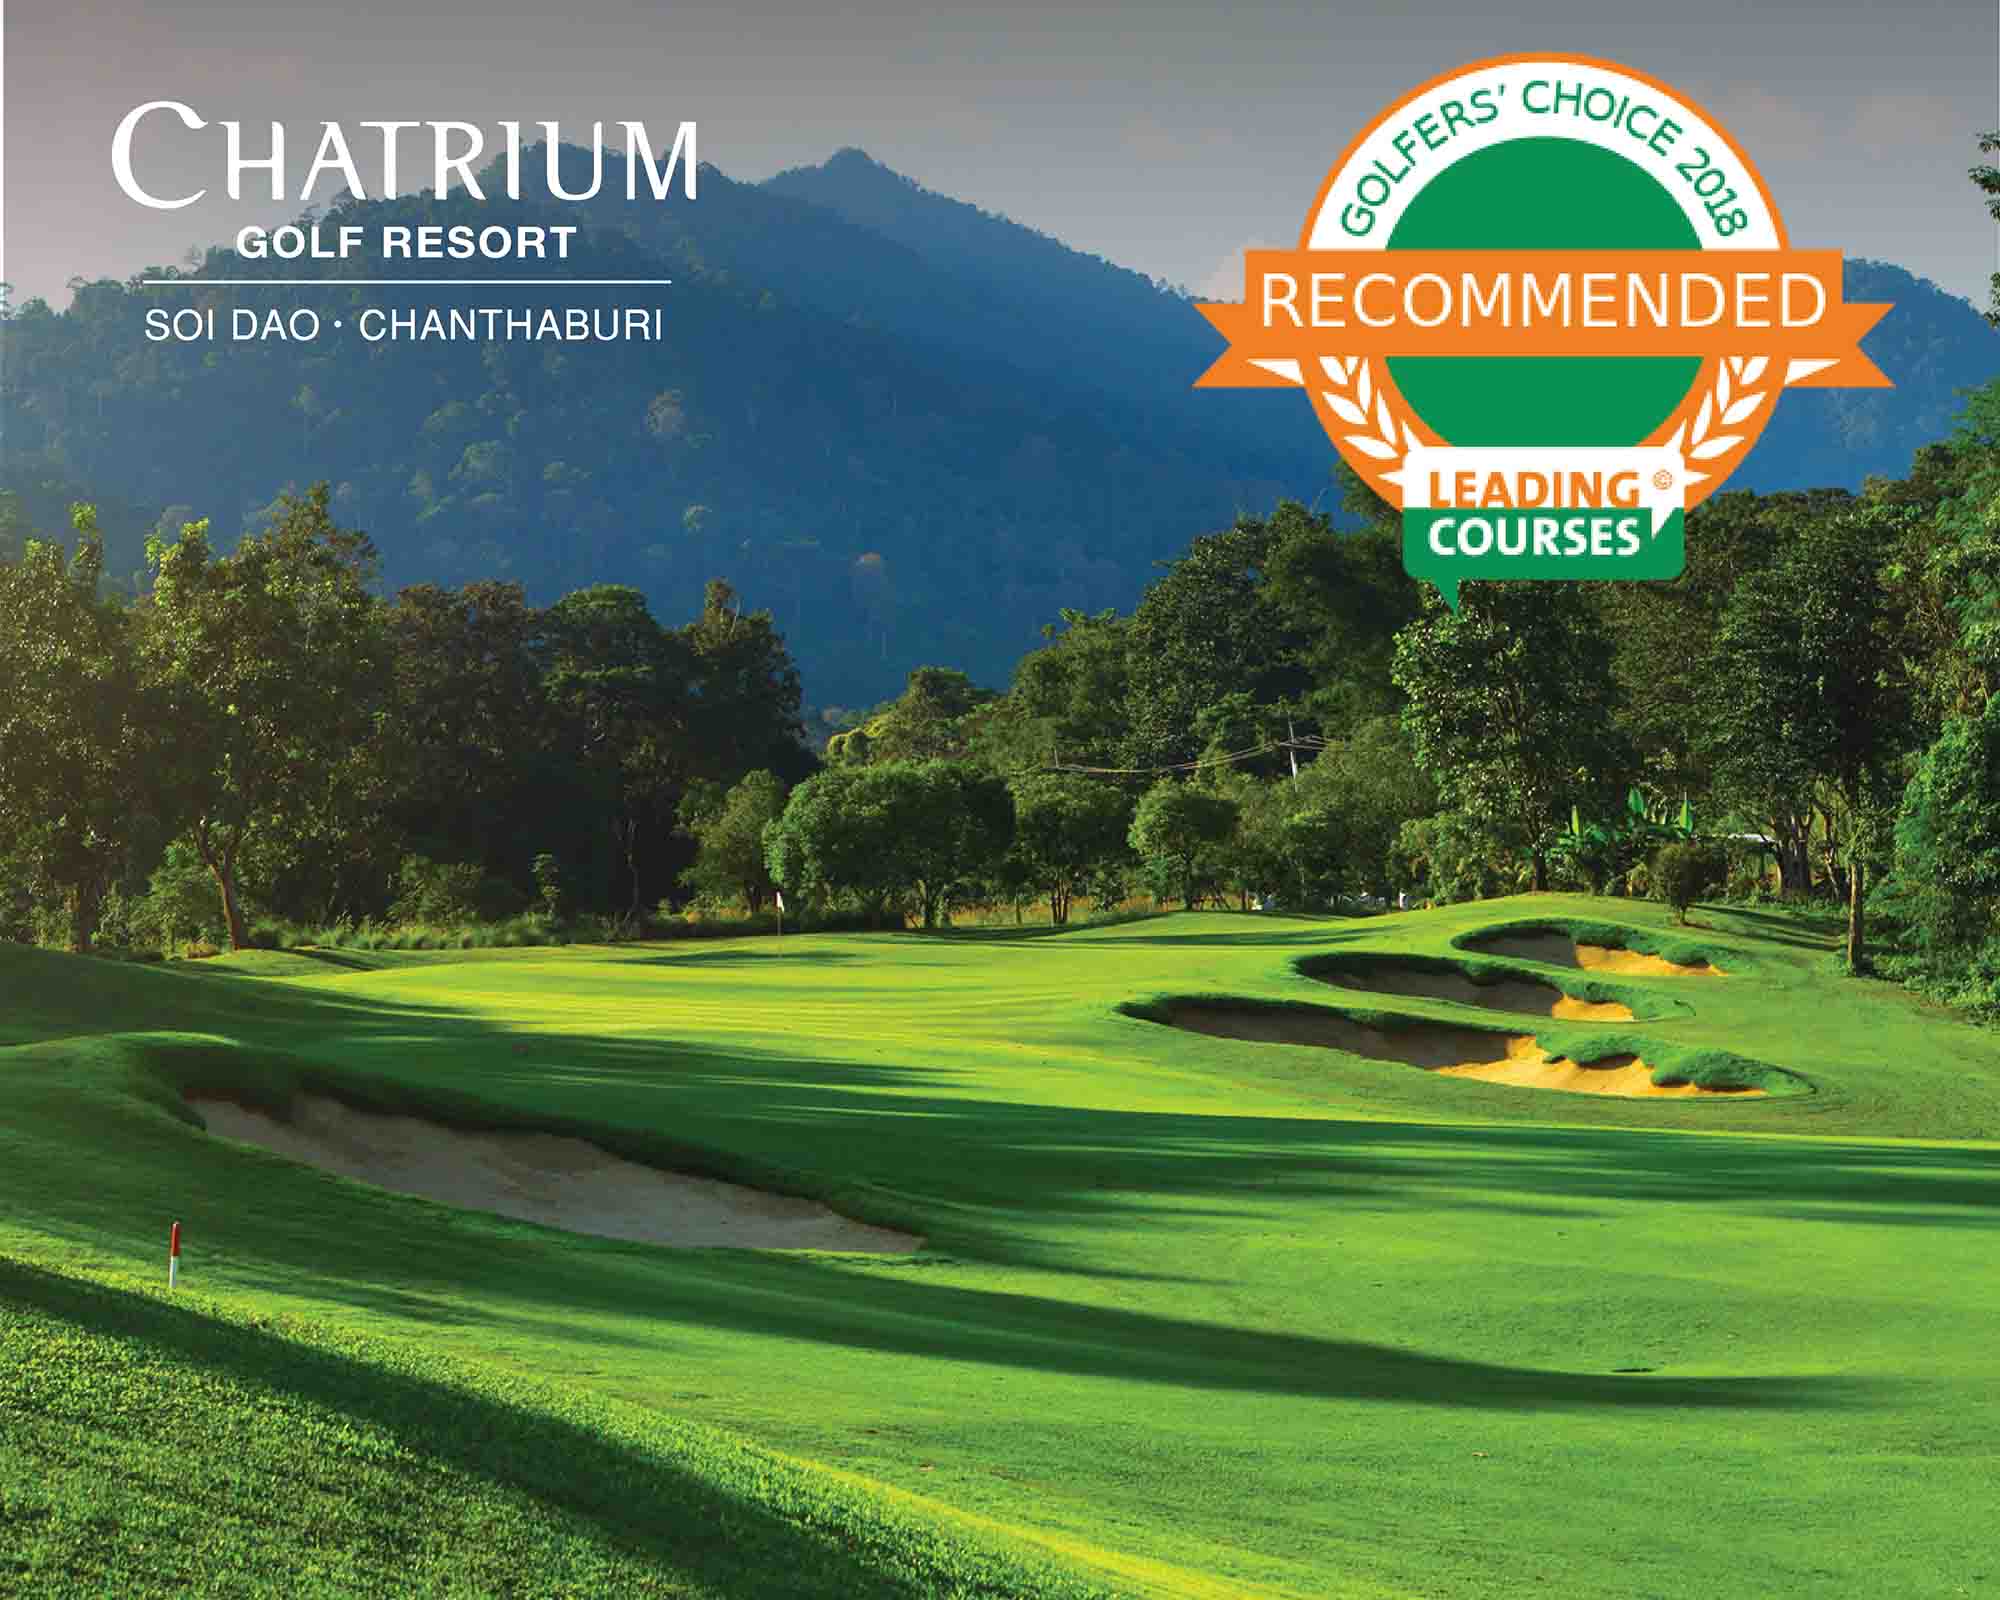 Certificate for Chatrium Golf Resort Soi Dao Chanthaburi